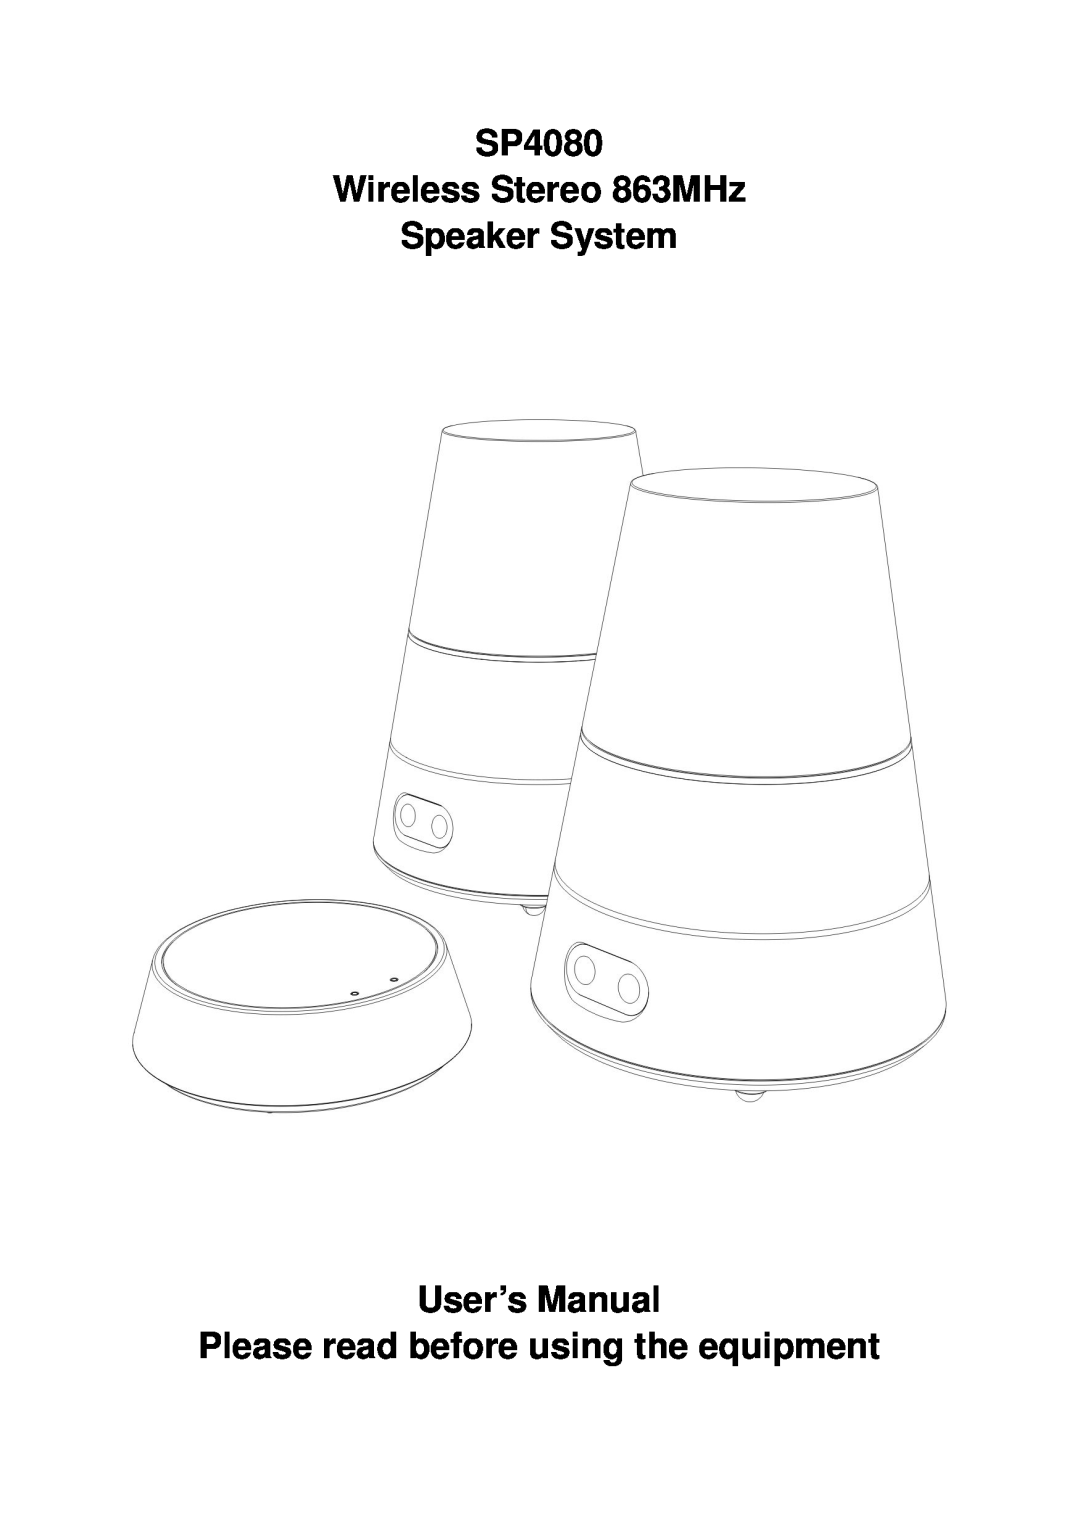 Mark Feldstein & Assoc user manual SP4080 Wireless Stereo 863MHz Speaker System, Please read before using the equipment 